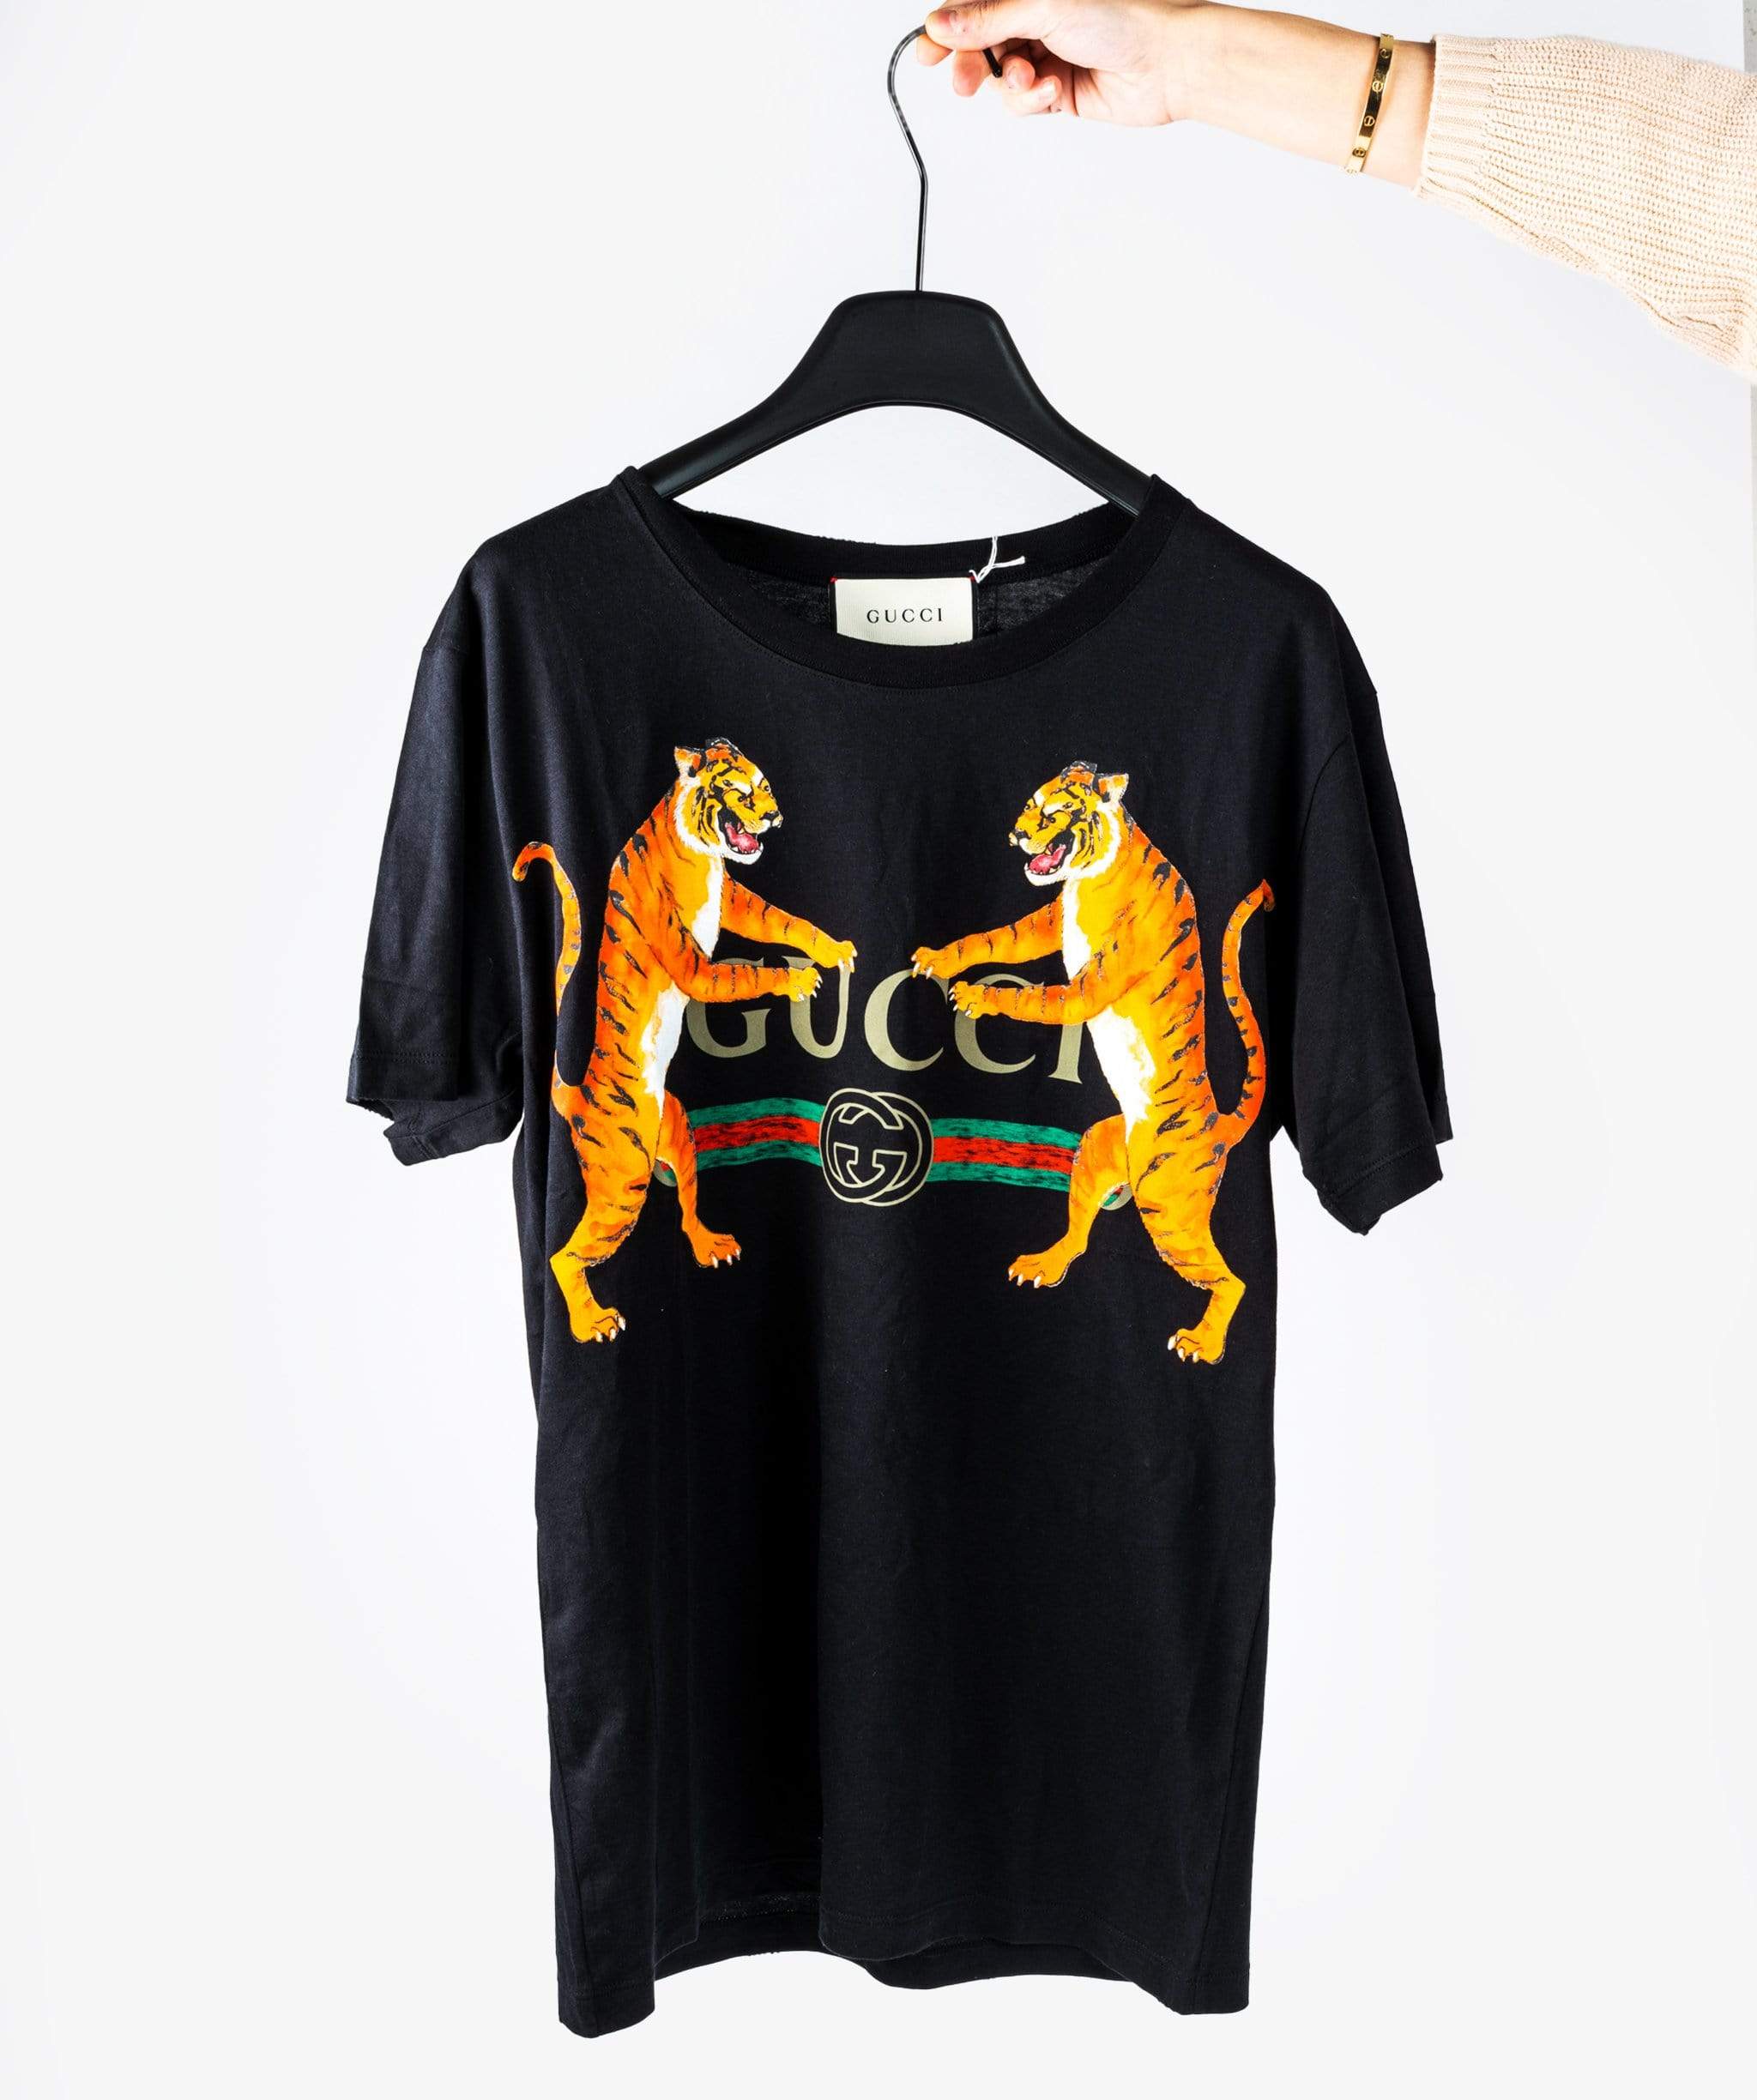 Black Printed T - Milan s fashion community sports Gucci and Balenciaga -  IetpShops Gambia - shirt from the 'Gucci Tiger' collection Gucci